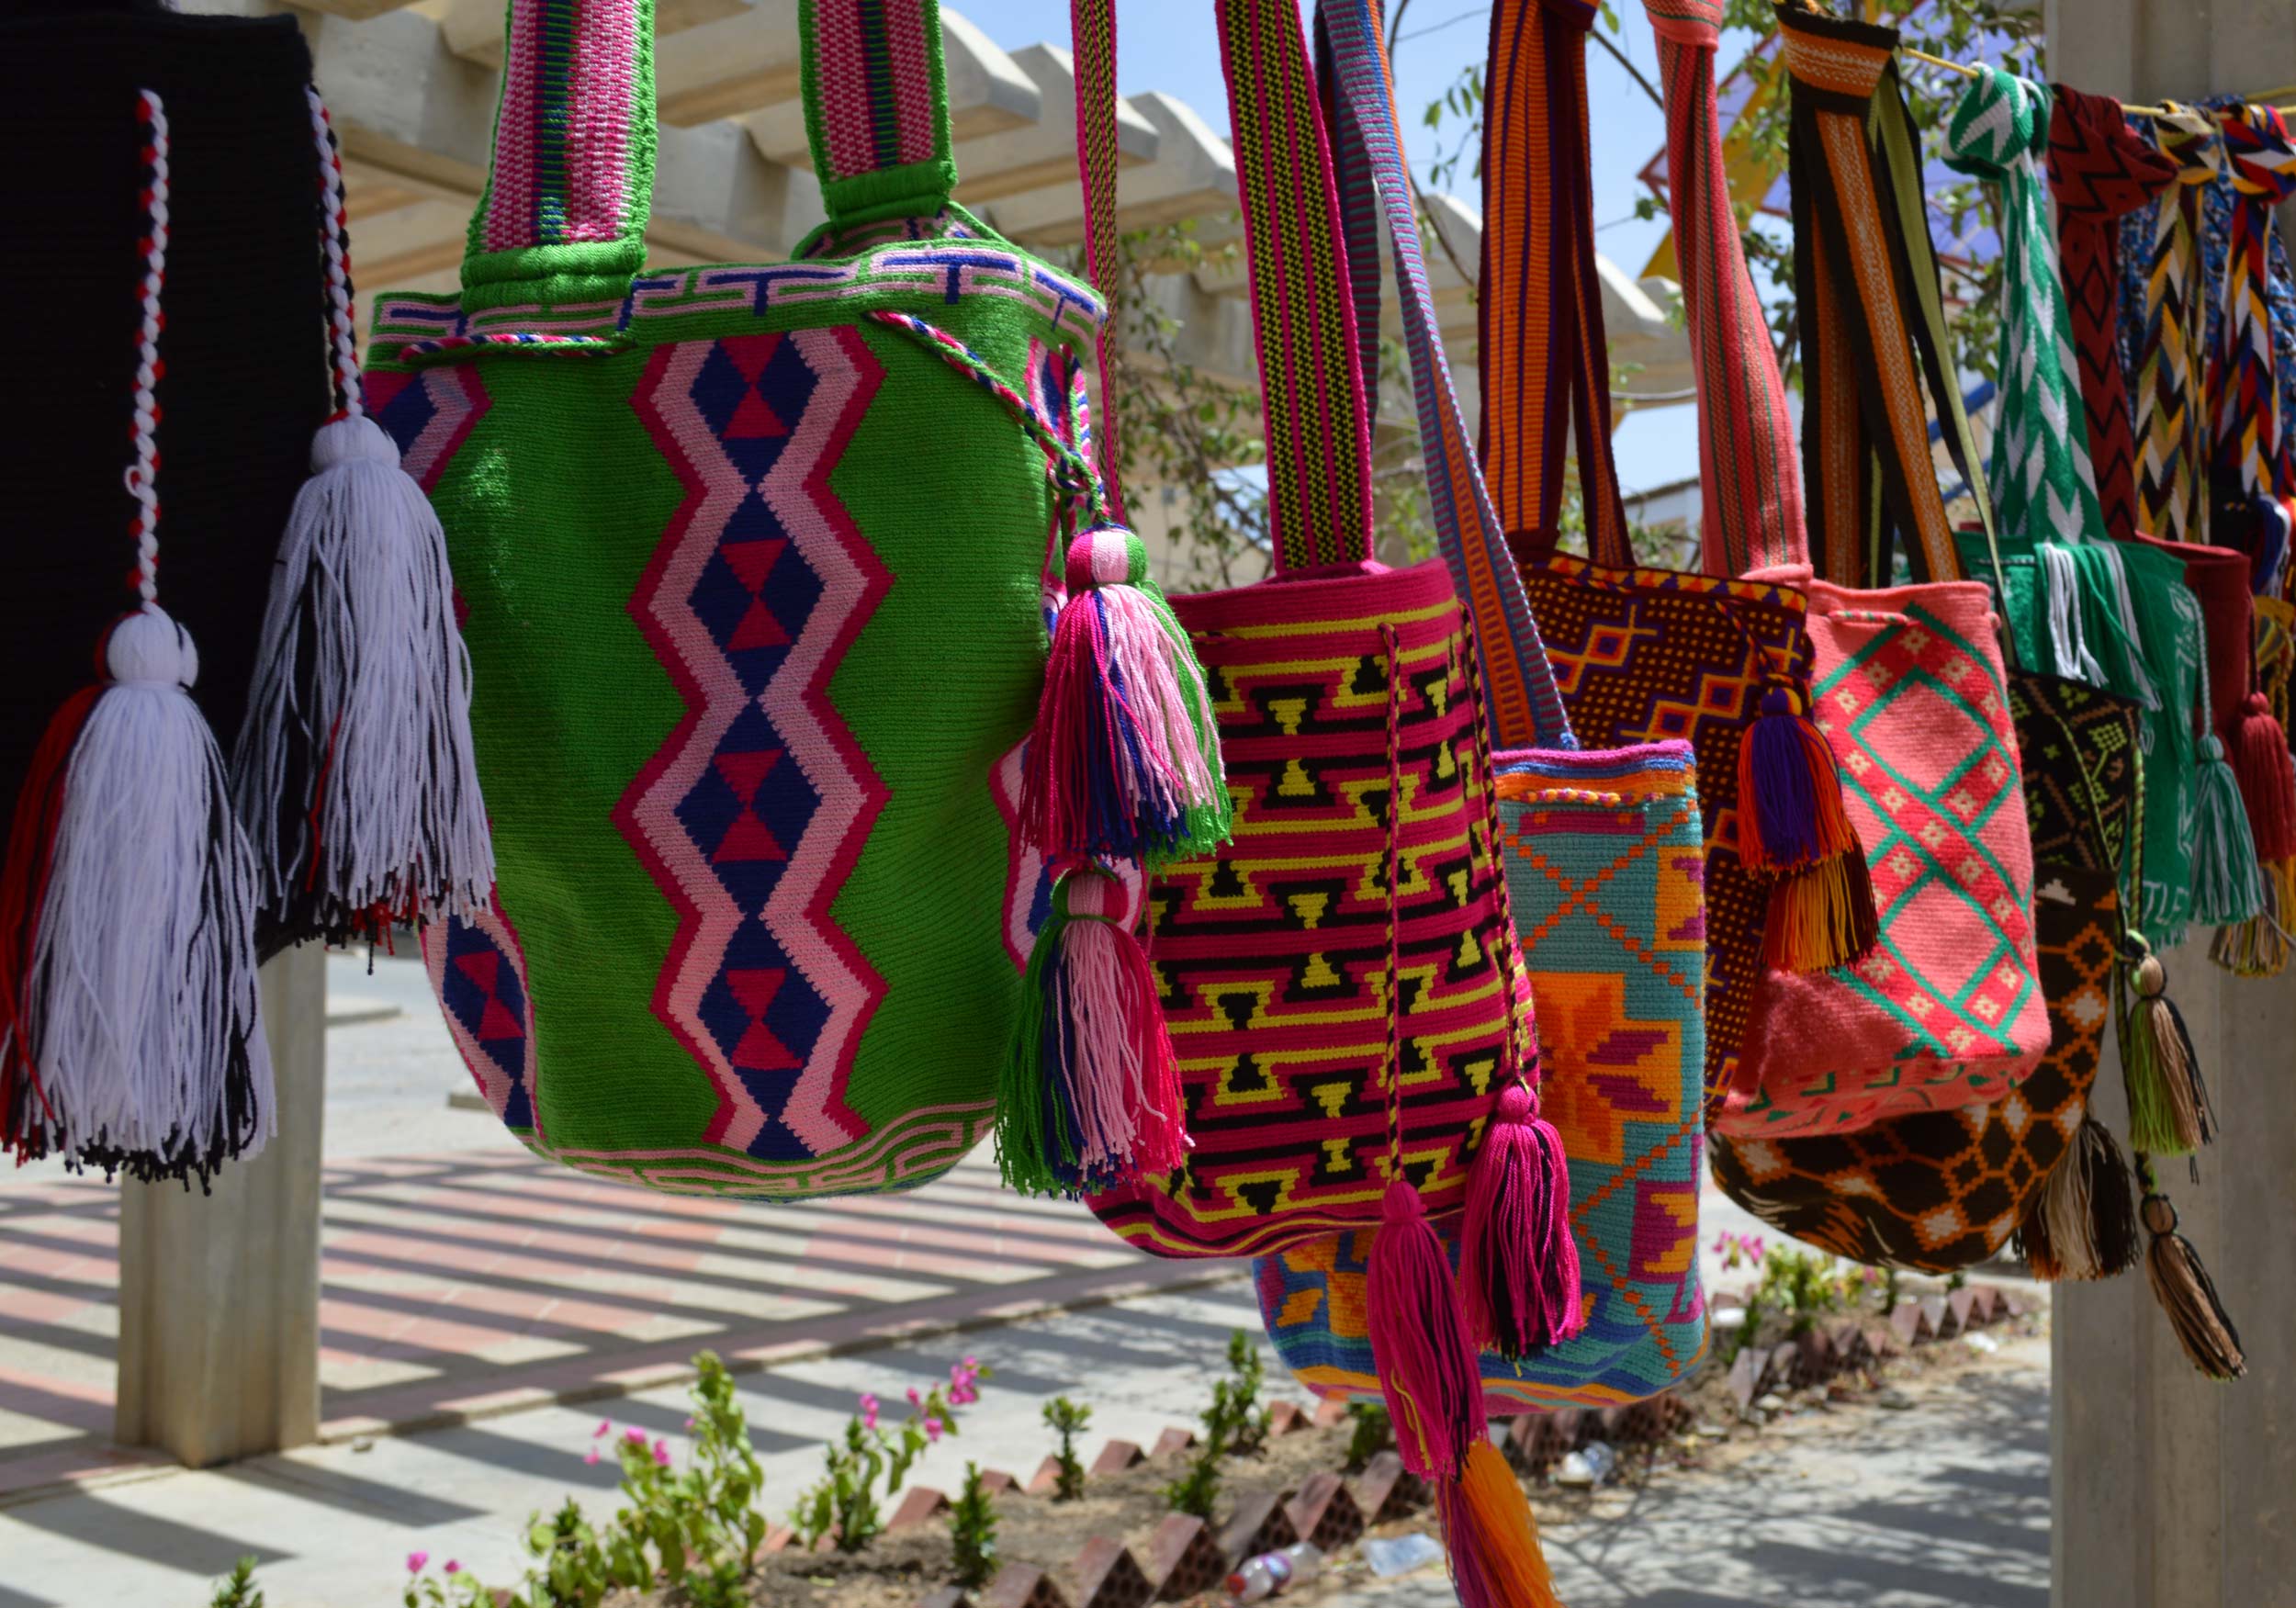 Wayuu mochila bag